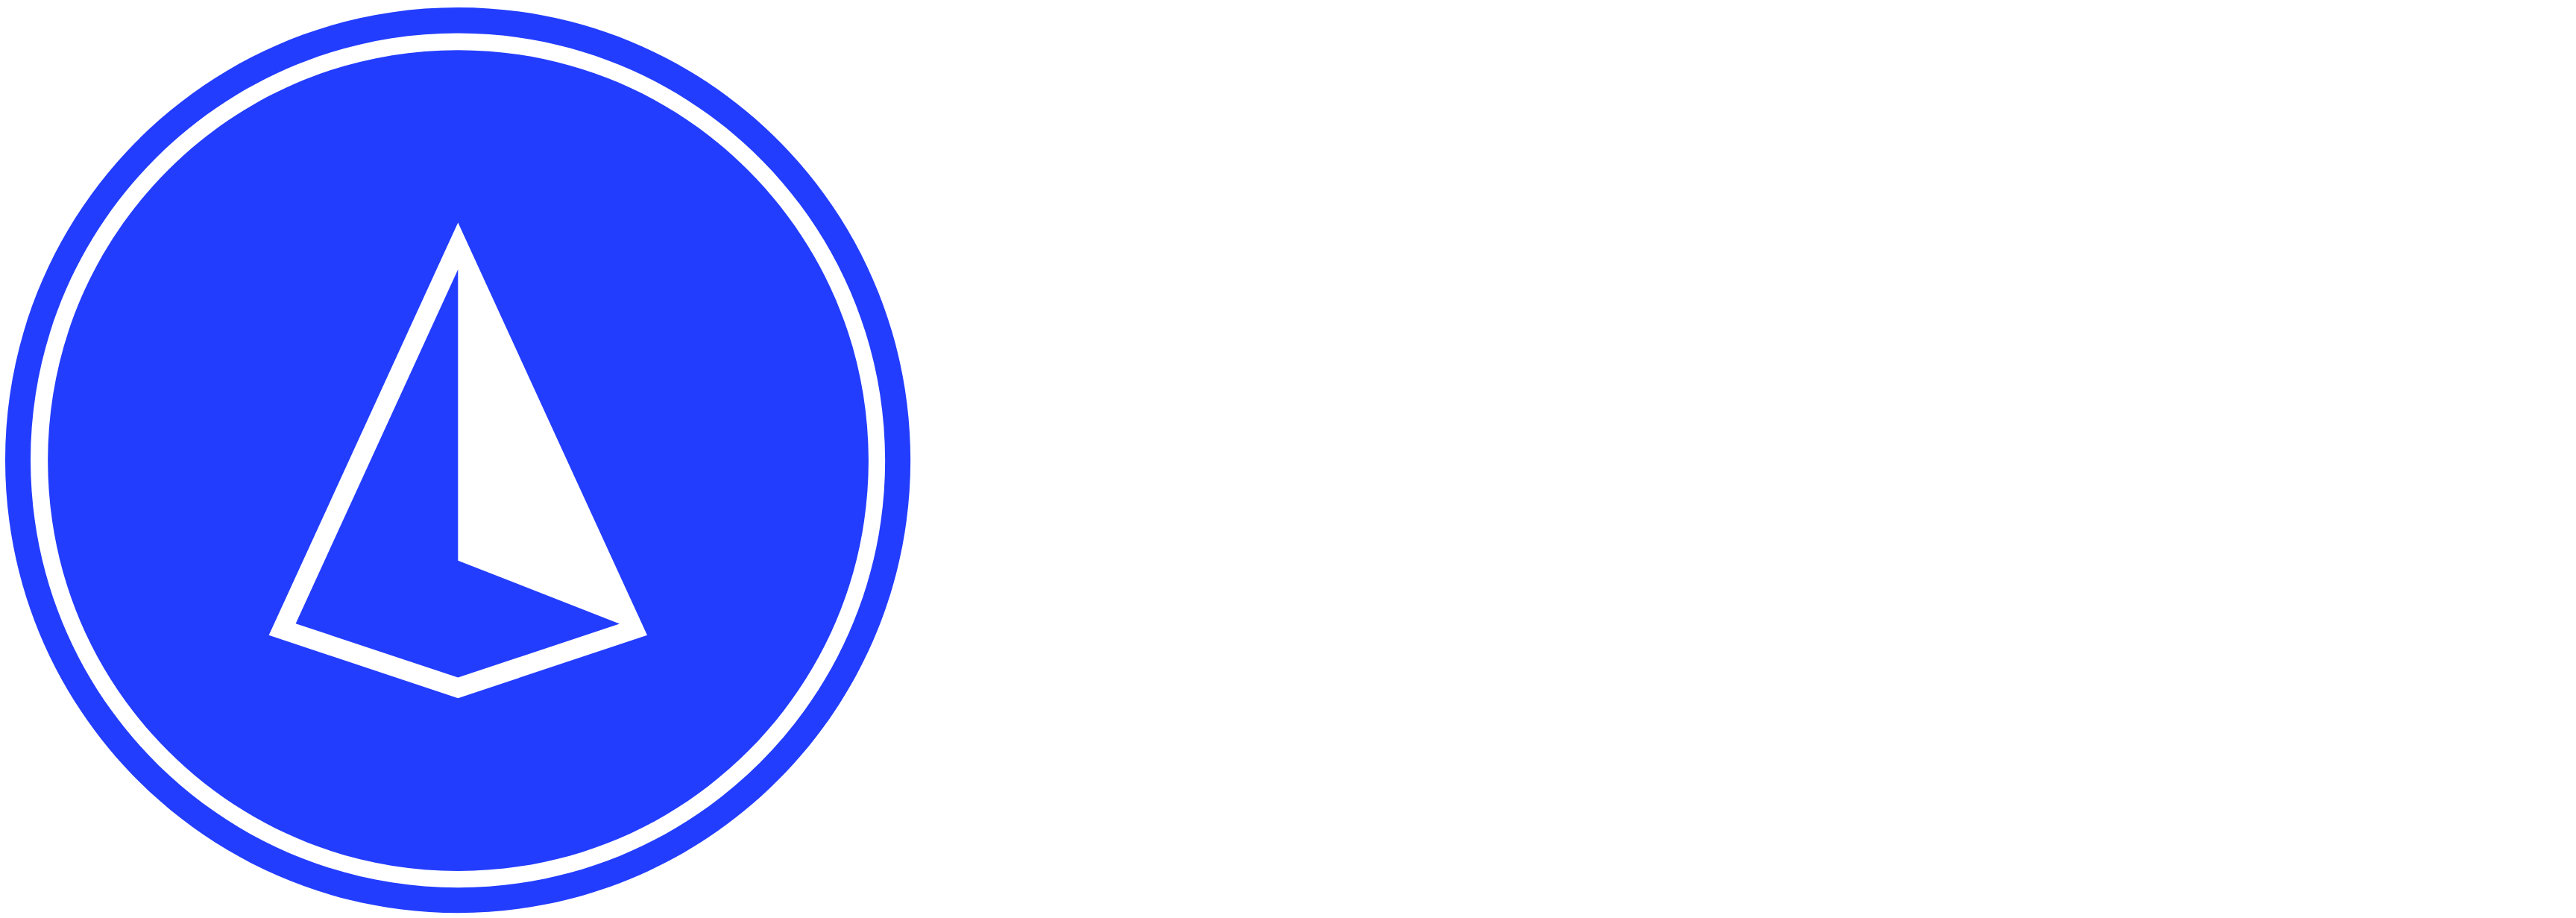 Apixa Academy Member